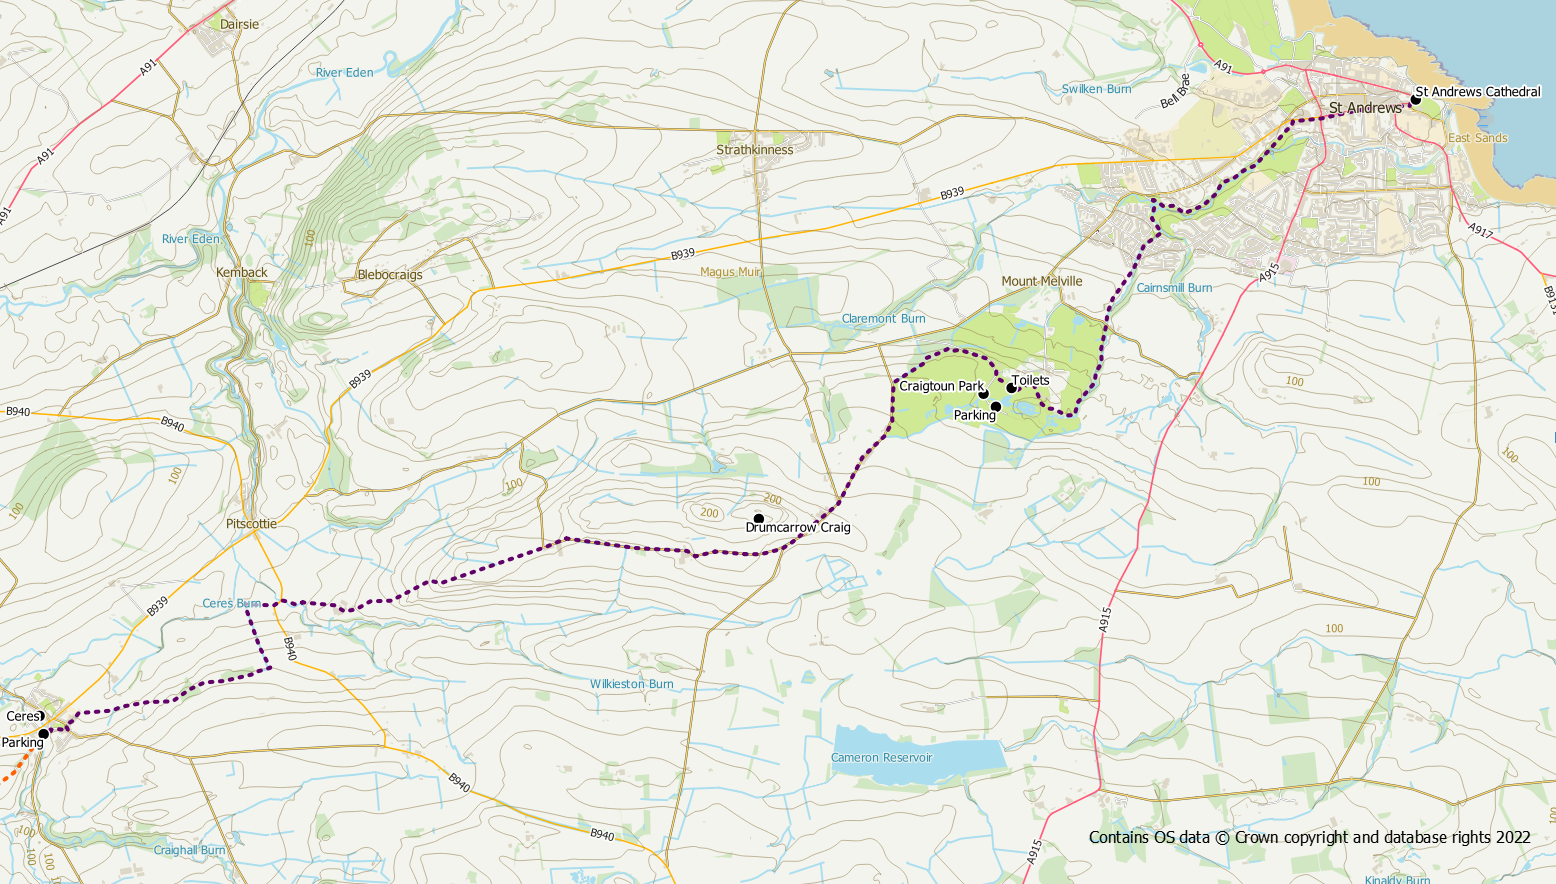 Fife Pilgrim Way route map